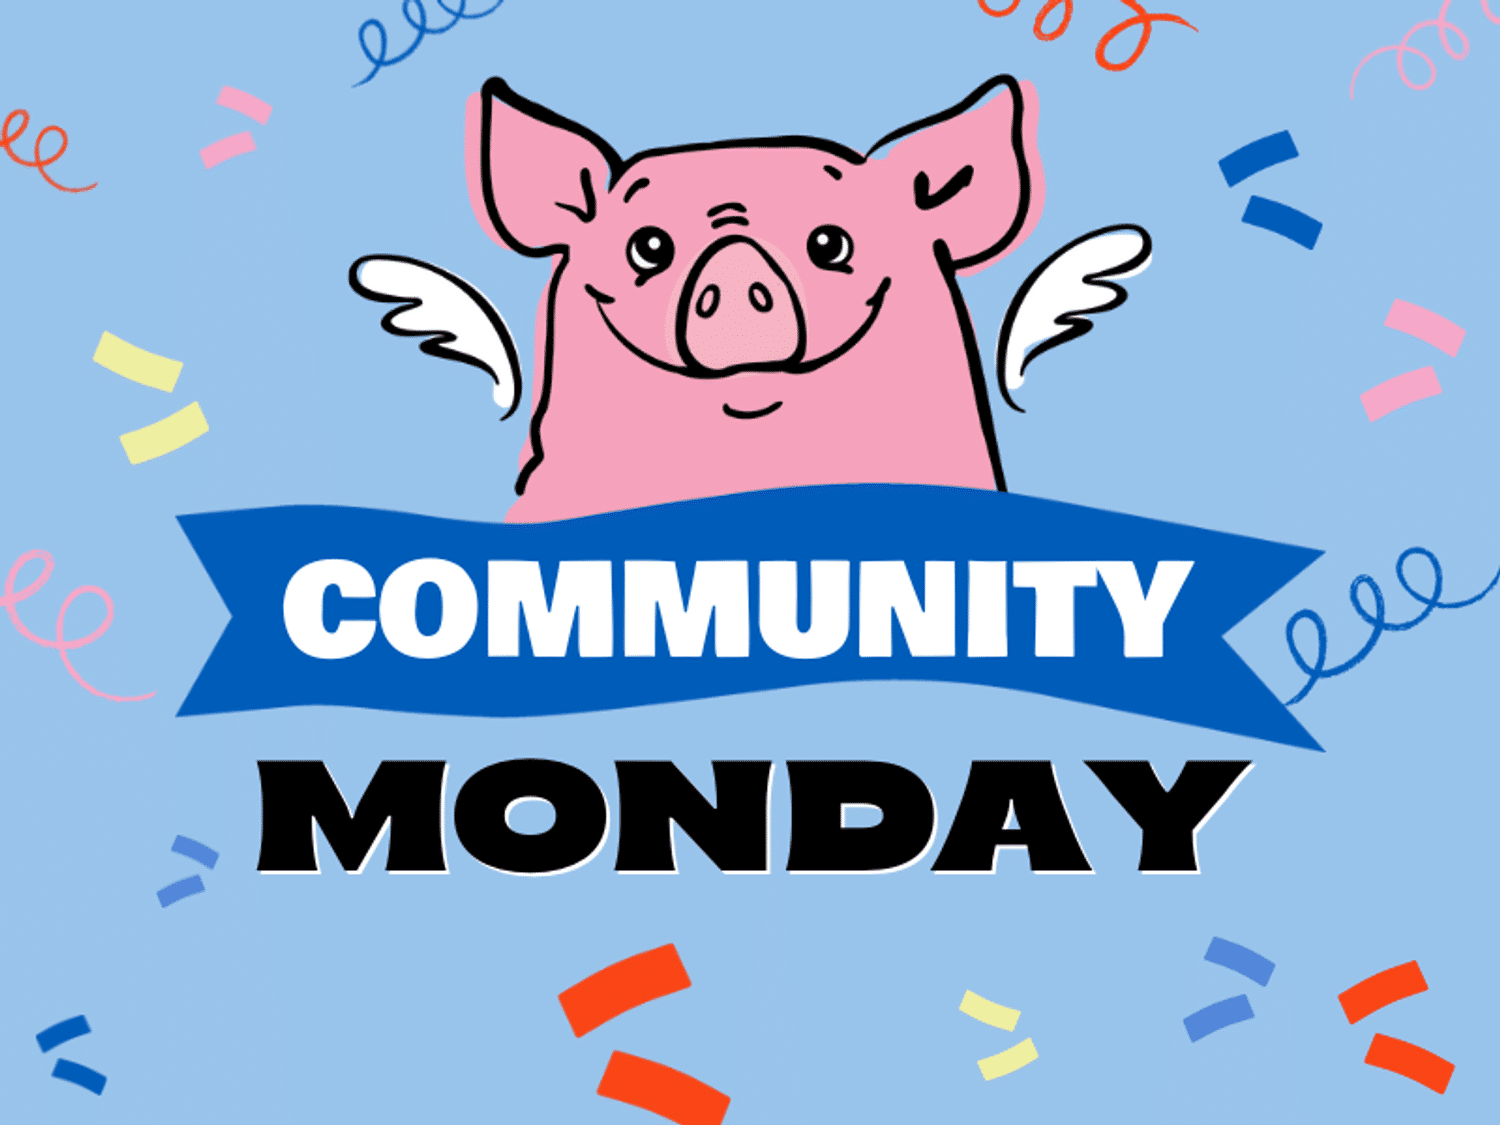 Join the Flying Pig Community Monday Celebration